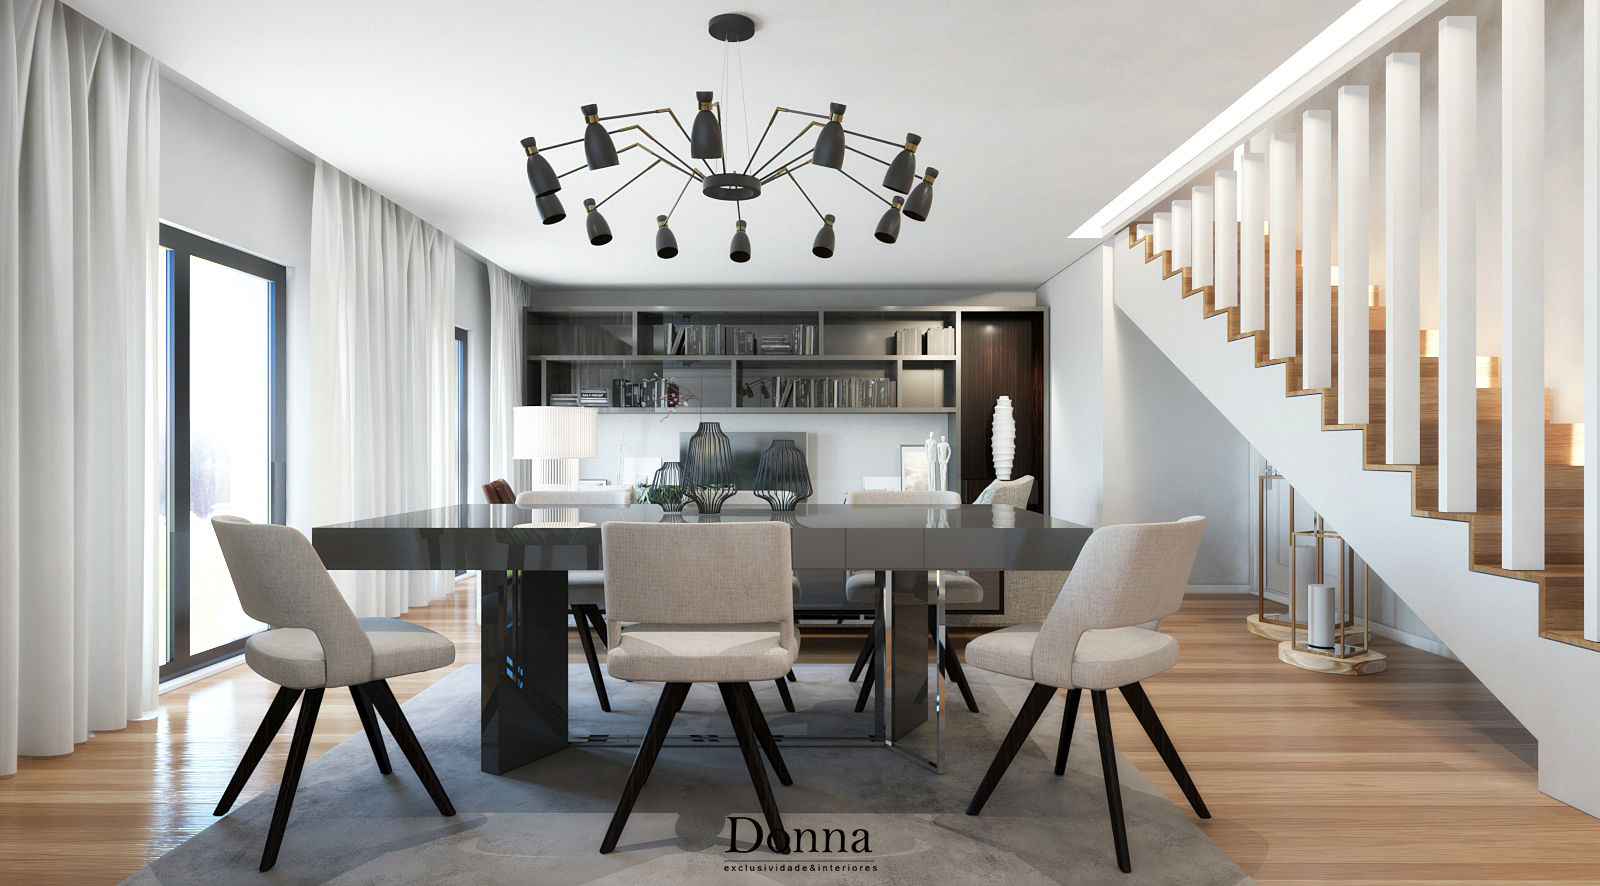 Apartamento Duplex no Porto, Donna - Exclusividade e Design Donna - Exclusividade e Design Modern dining room Chairs & benches